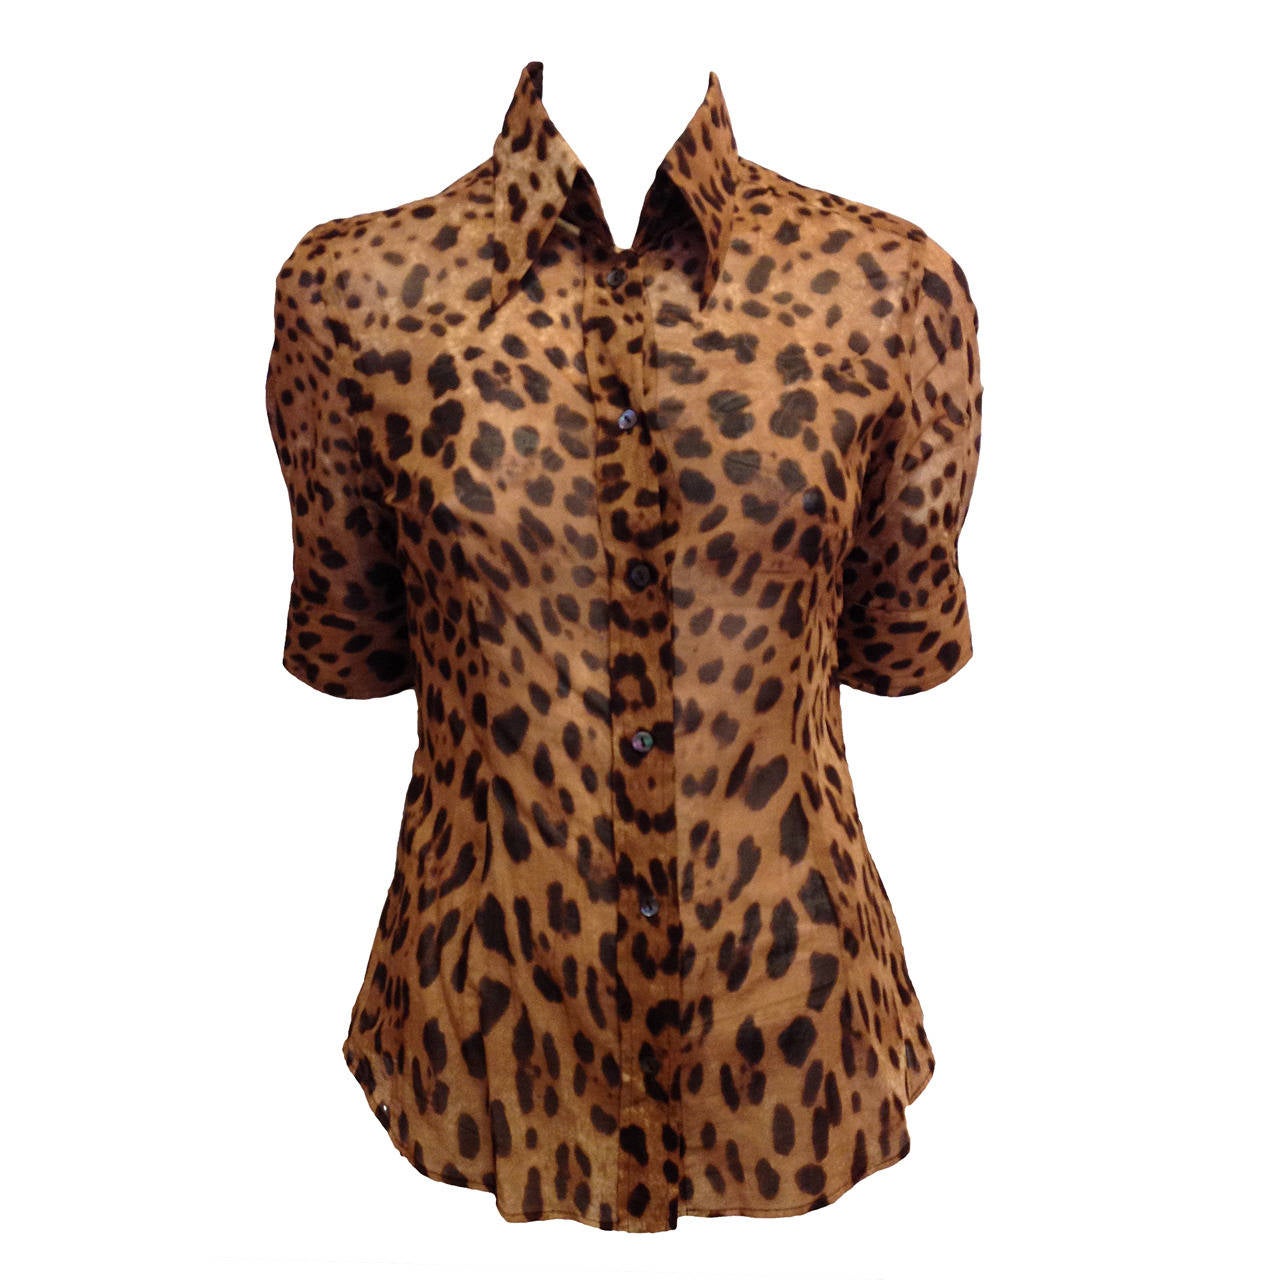 Dolce & Gabbana Tan and Brown Leopard Print Shirt